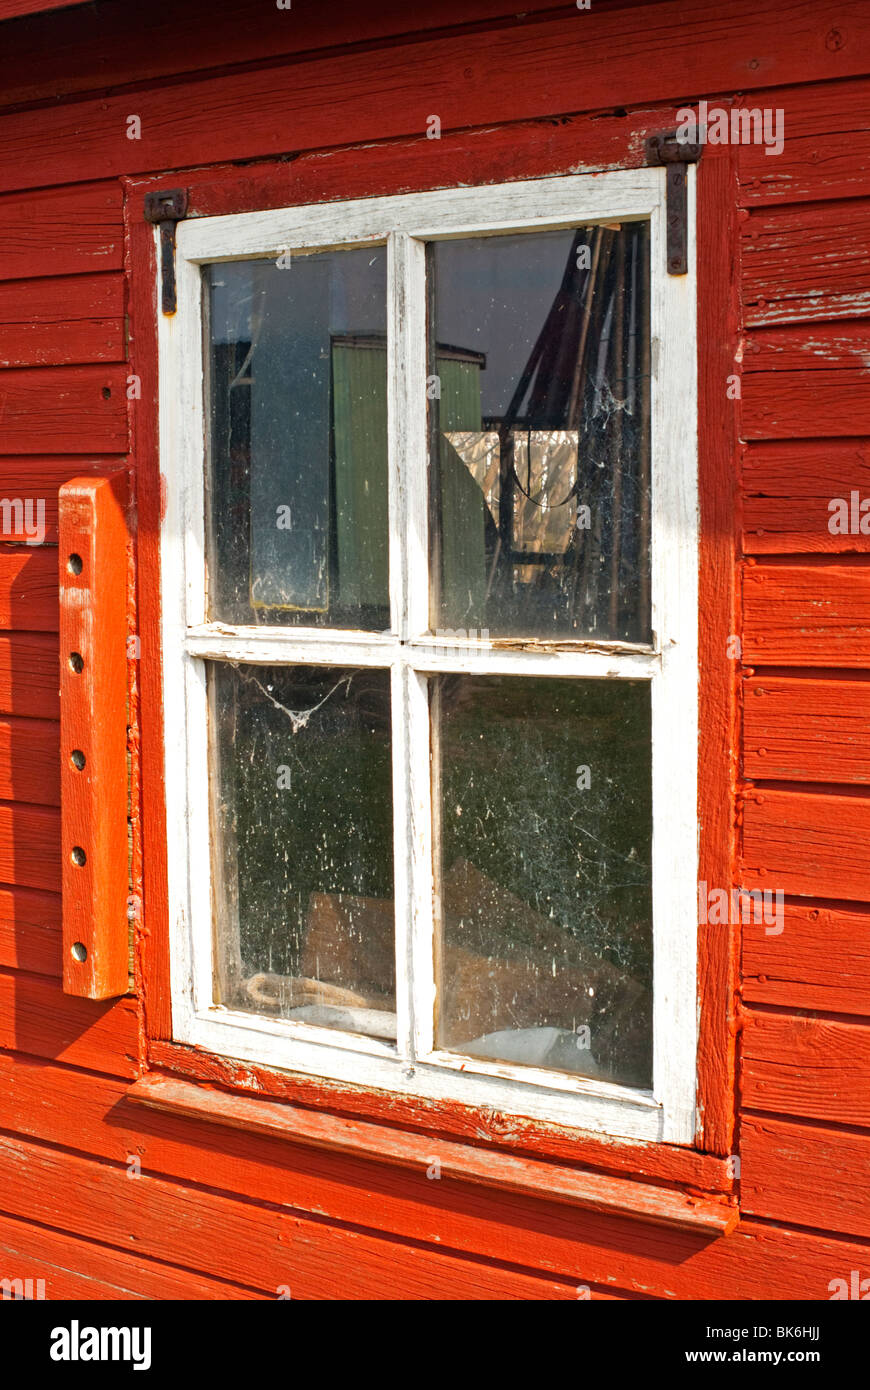 Alte Fenster, die fehlende Farbe auf dem Land. Limfjord, Dänemark,  Scandinavia Stockfotografie - Alamy